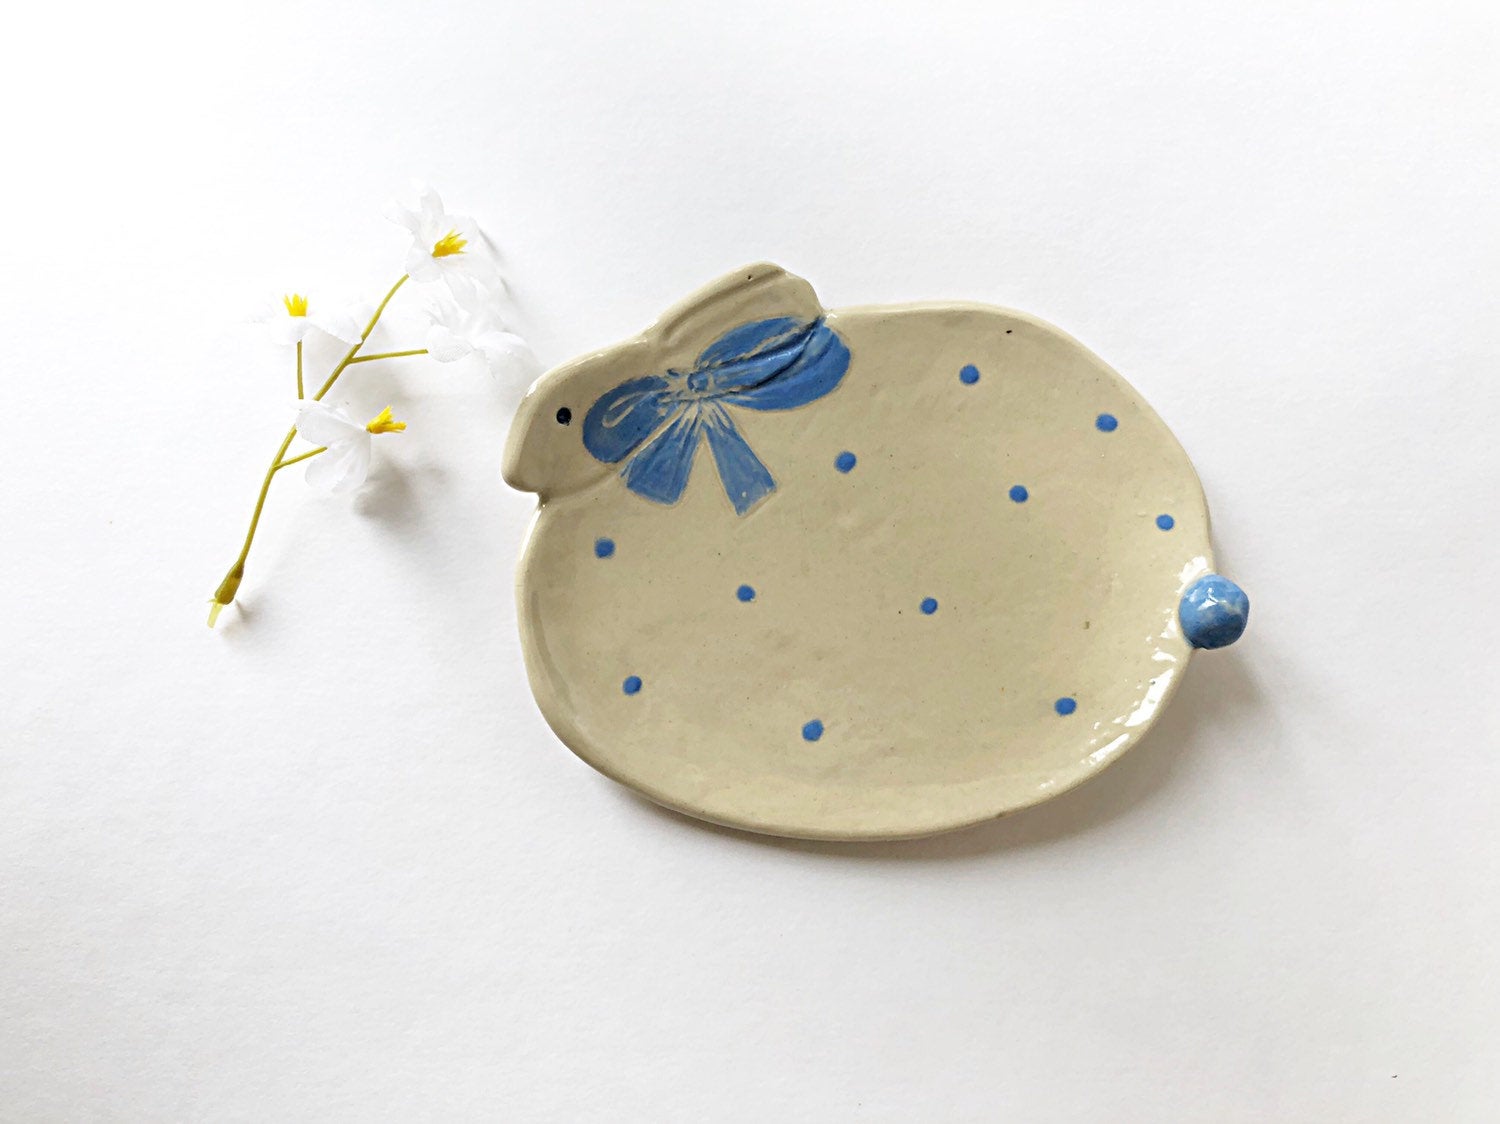 Rabbit plate - ceramic beige blue